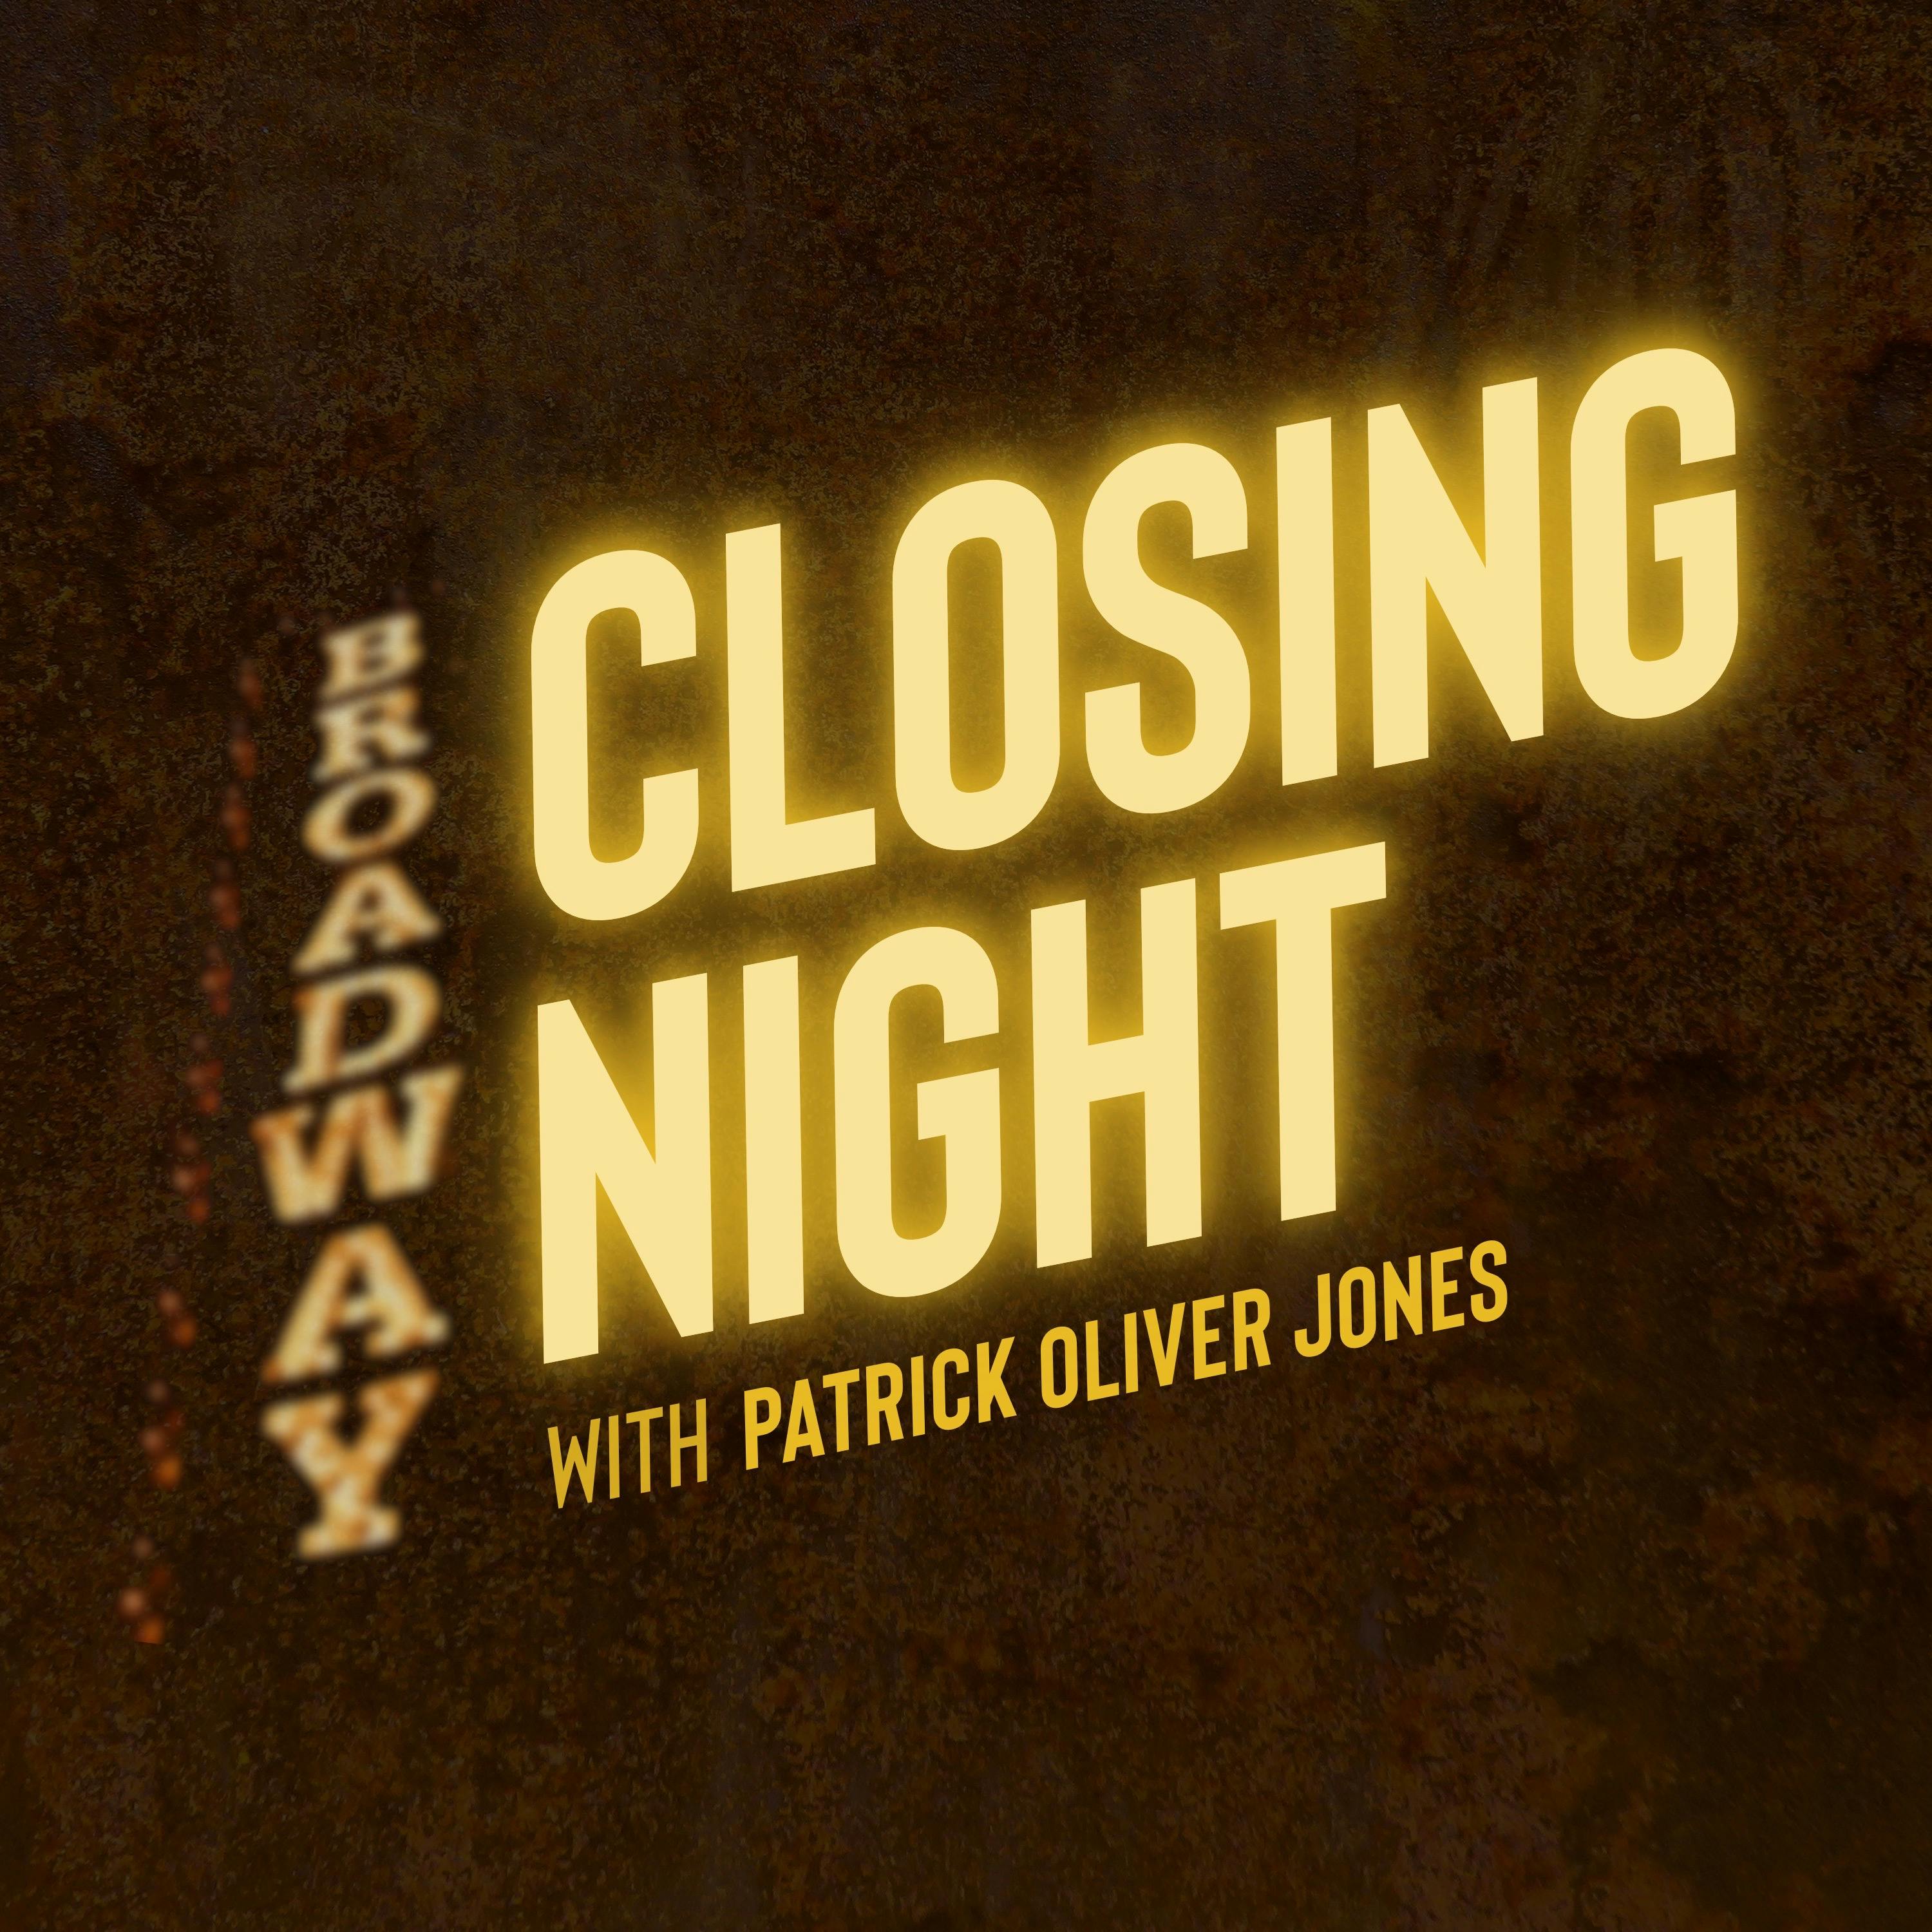 Closing Night podcast show image